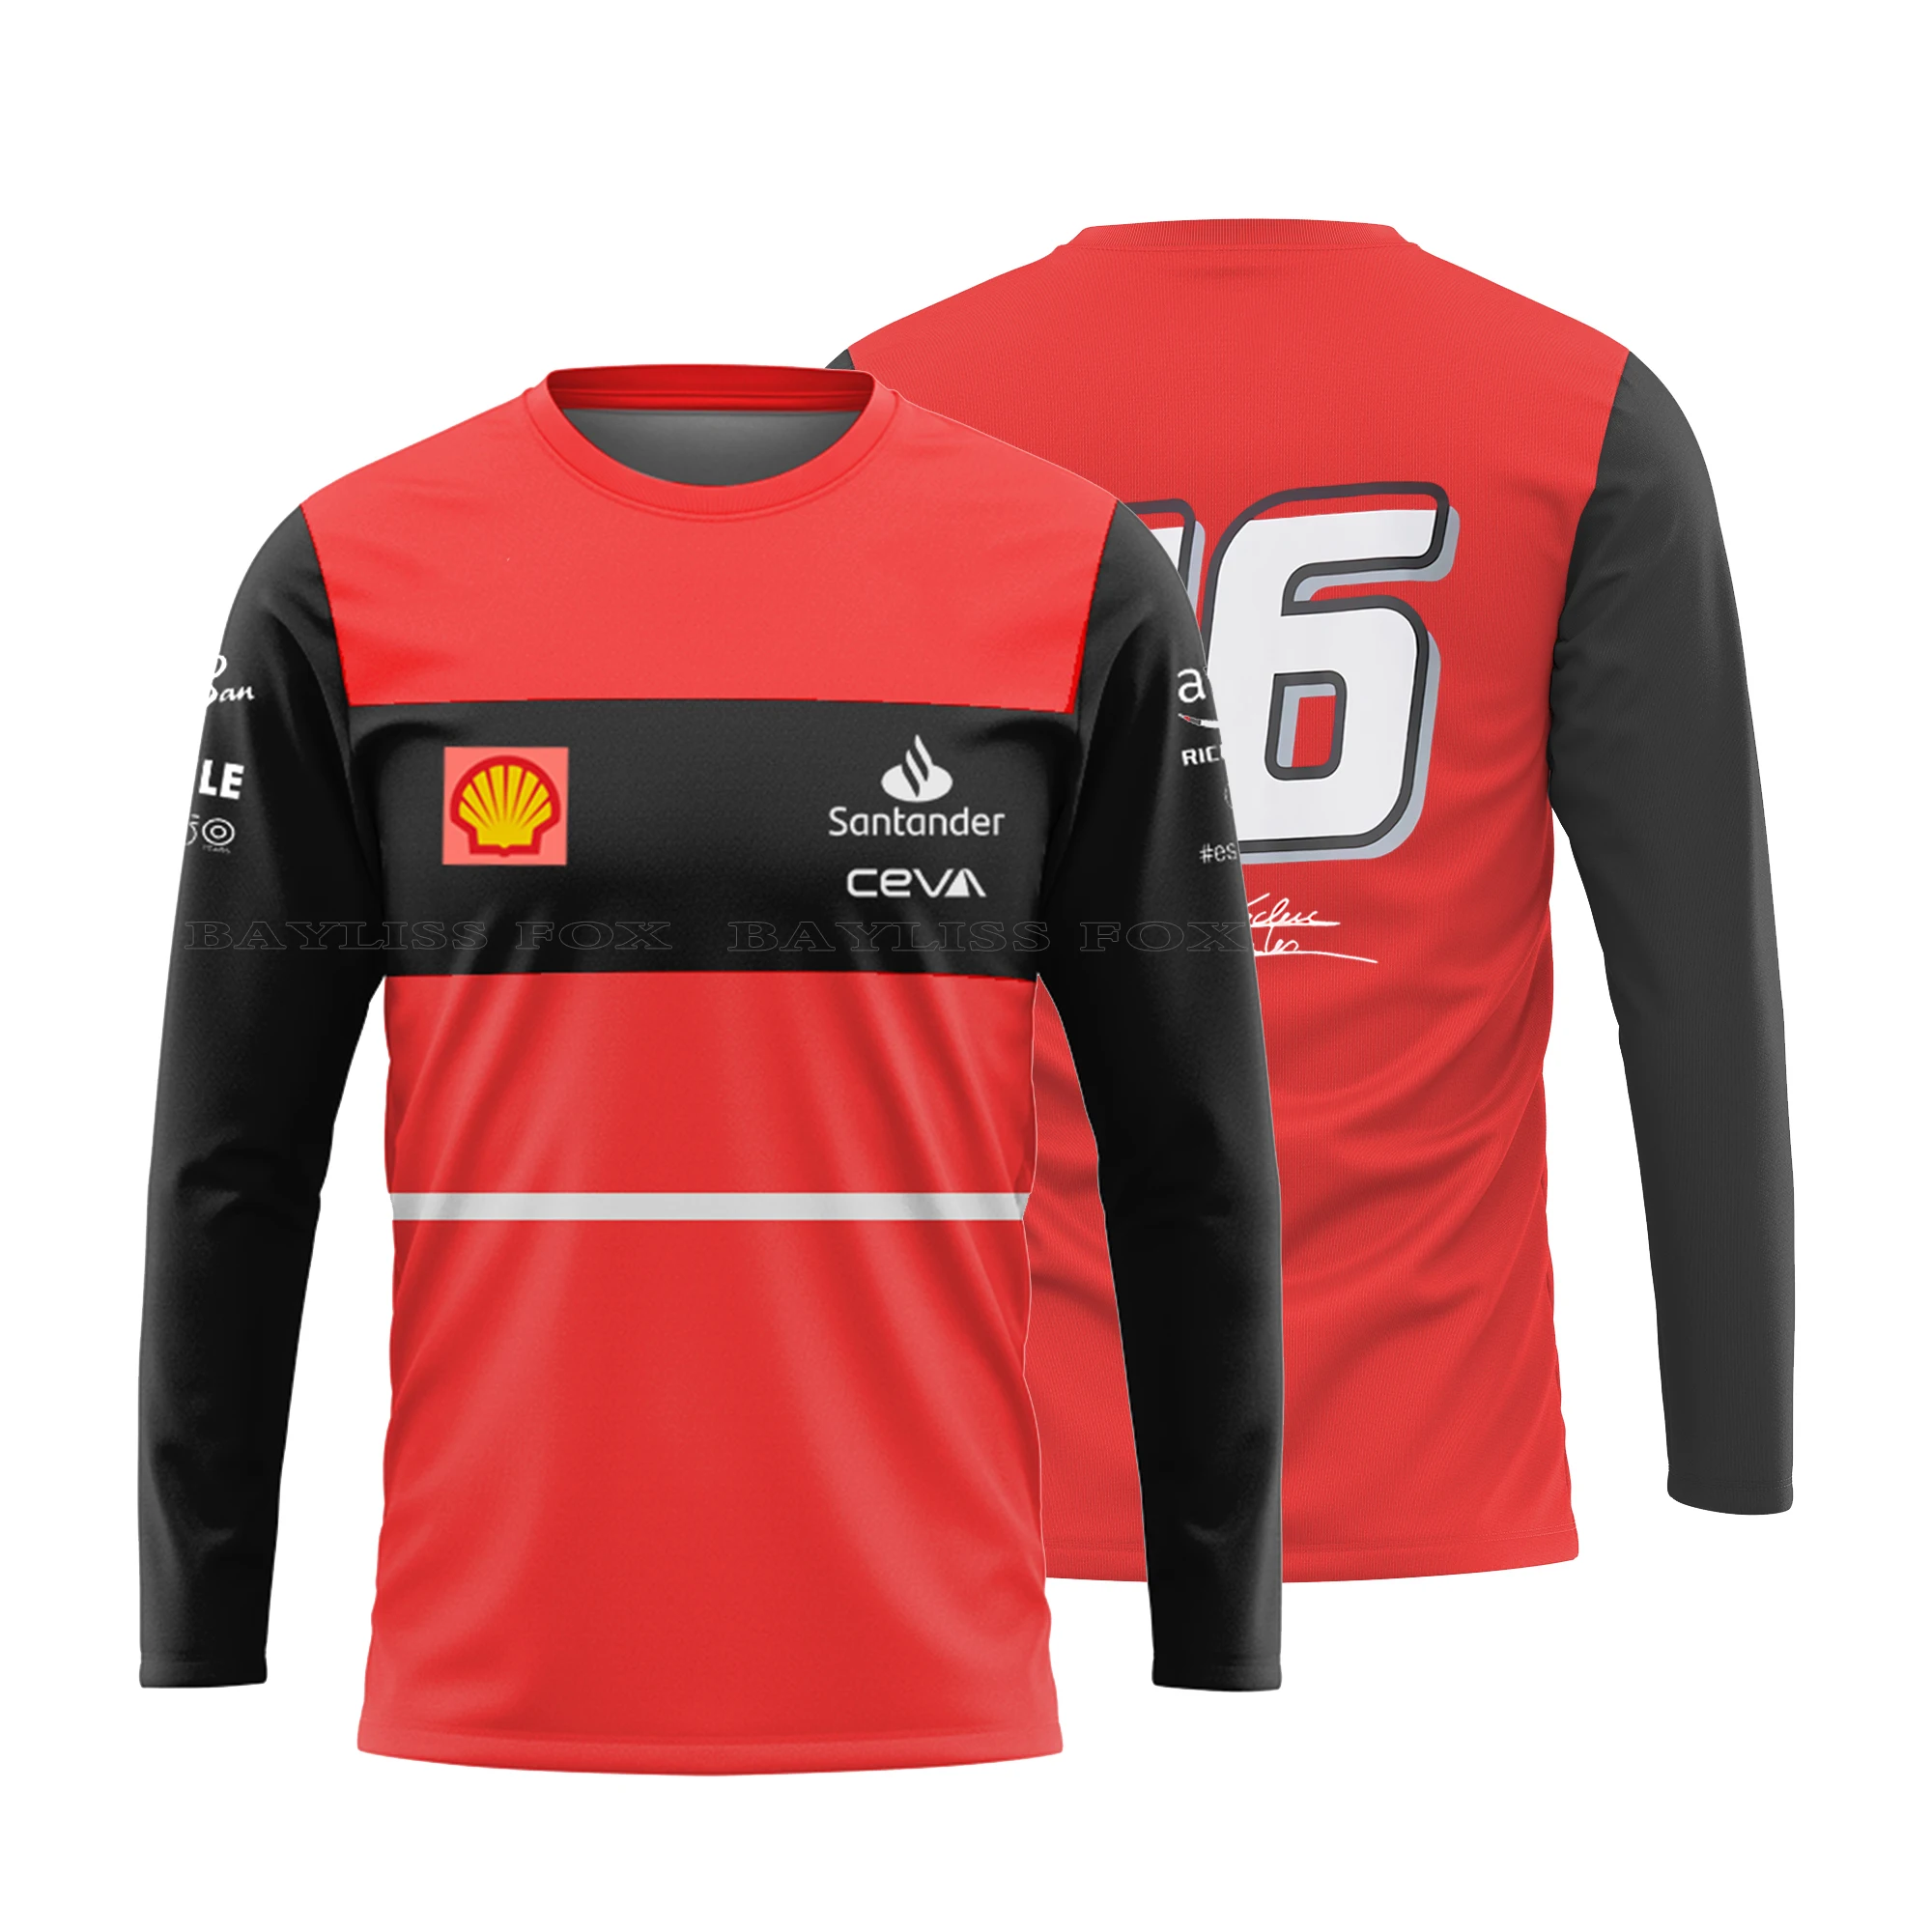 

For Ferrari Long T-Shirt Driver Leclerc/Sainz F1 2022 Official Team Summer Motorsport Racing Red Quick-dry Breathable Jerseys